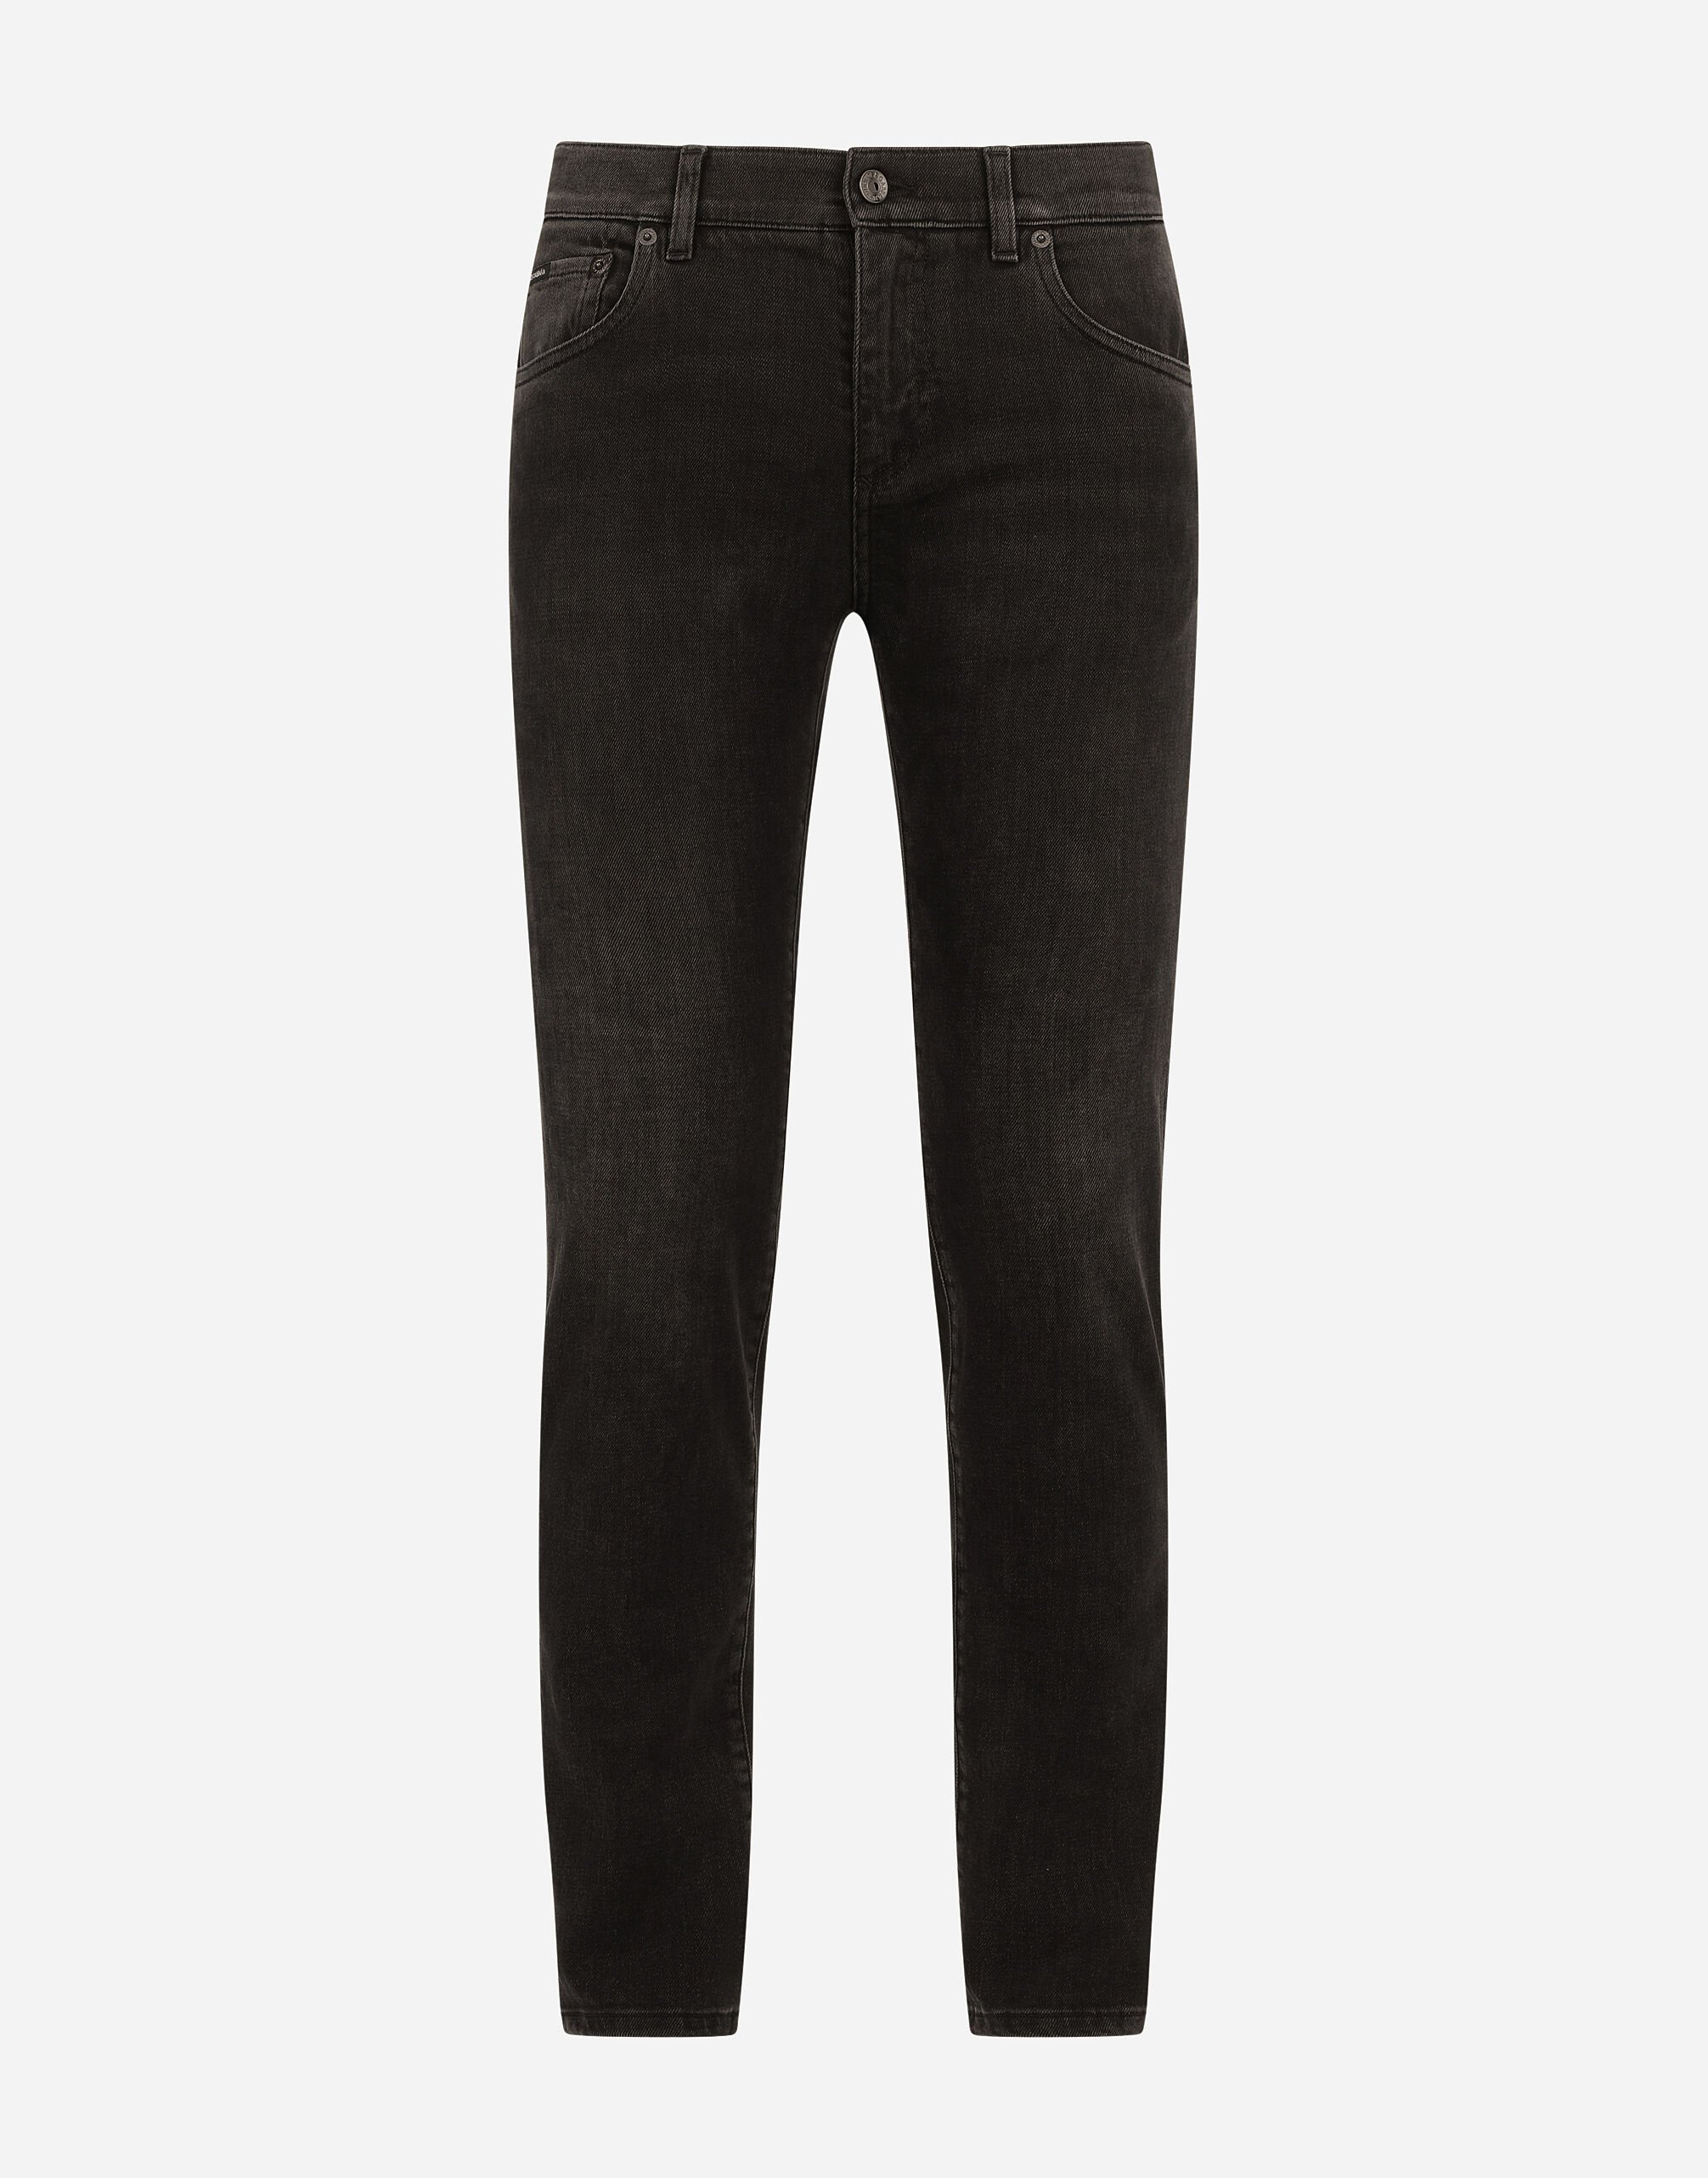 Dolce & Gabbana Black wash skinny stretch jeans Multicolor GY07LDG8HG2